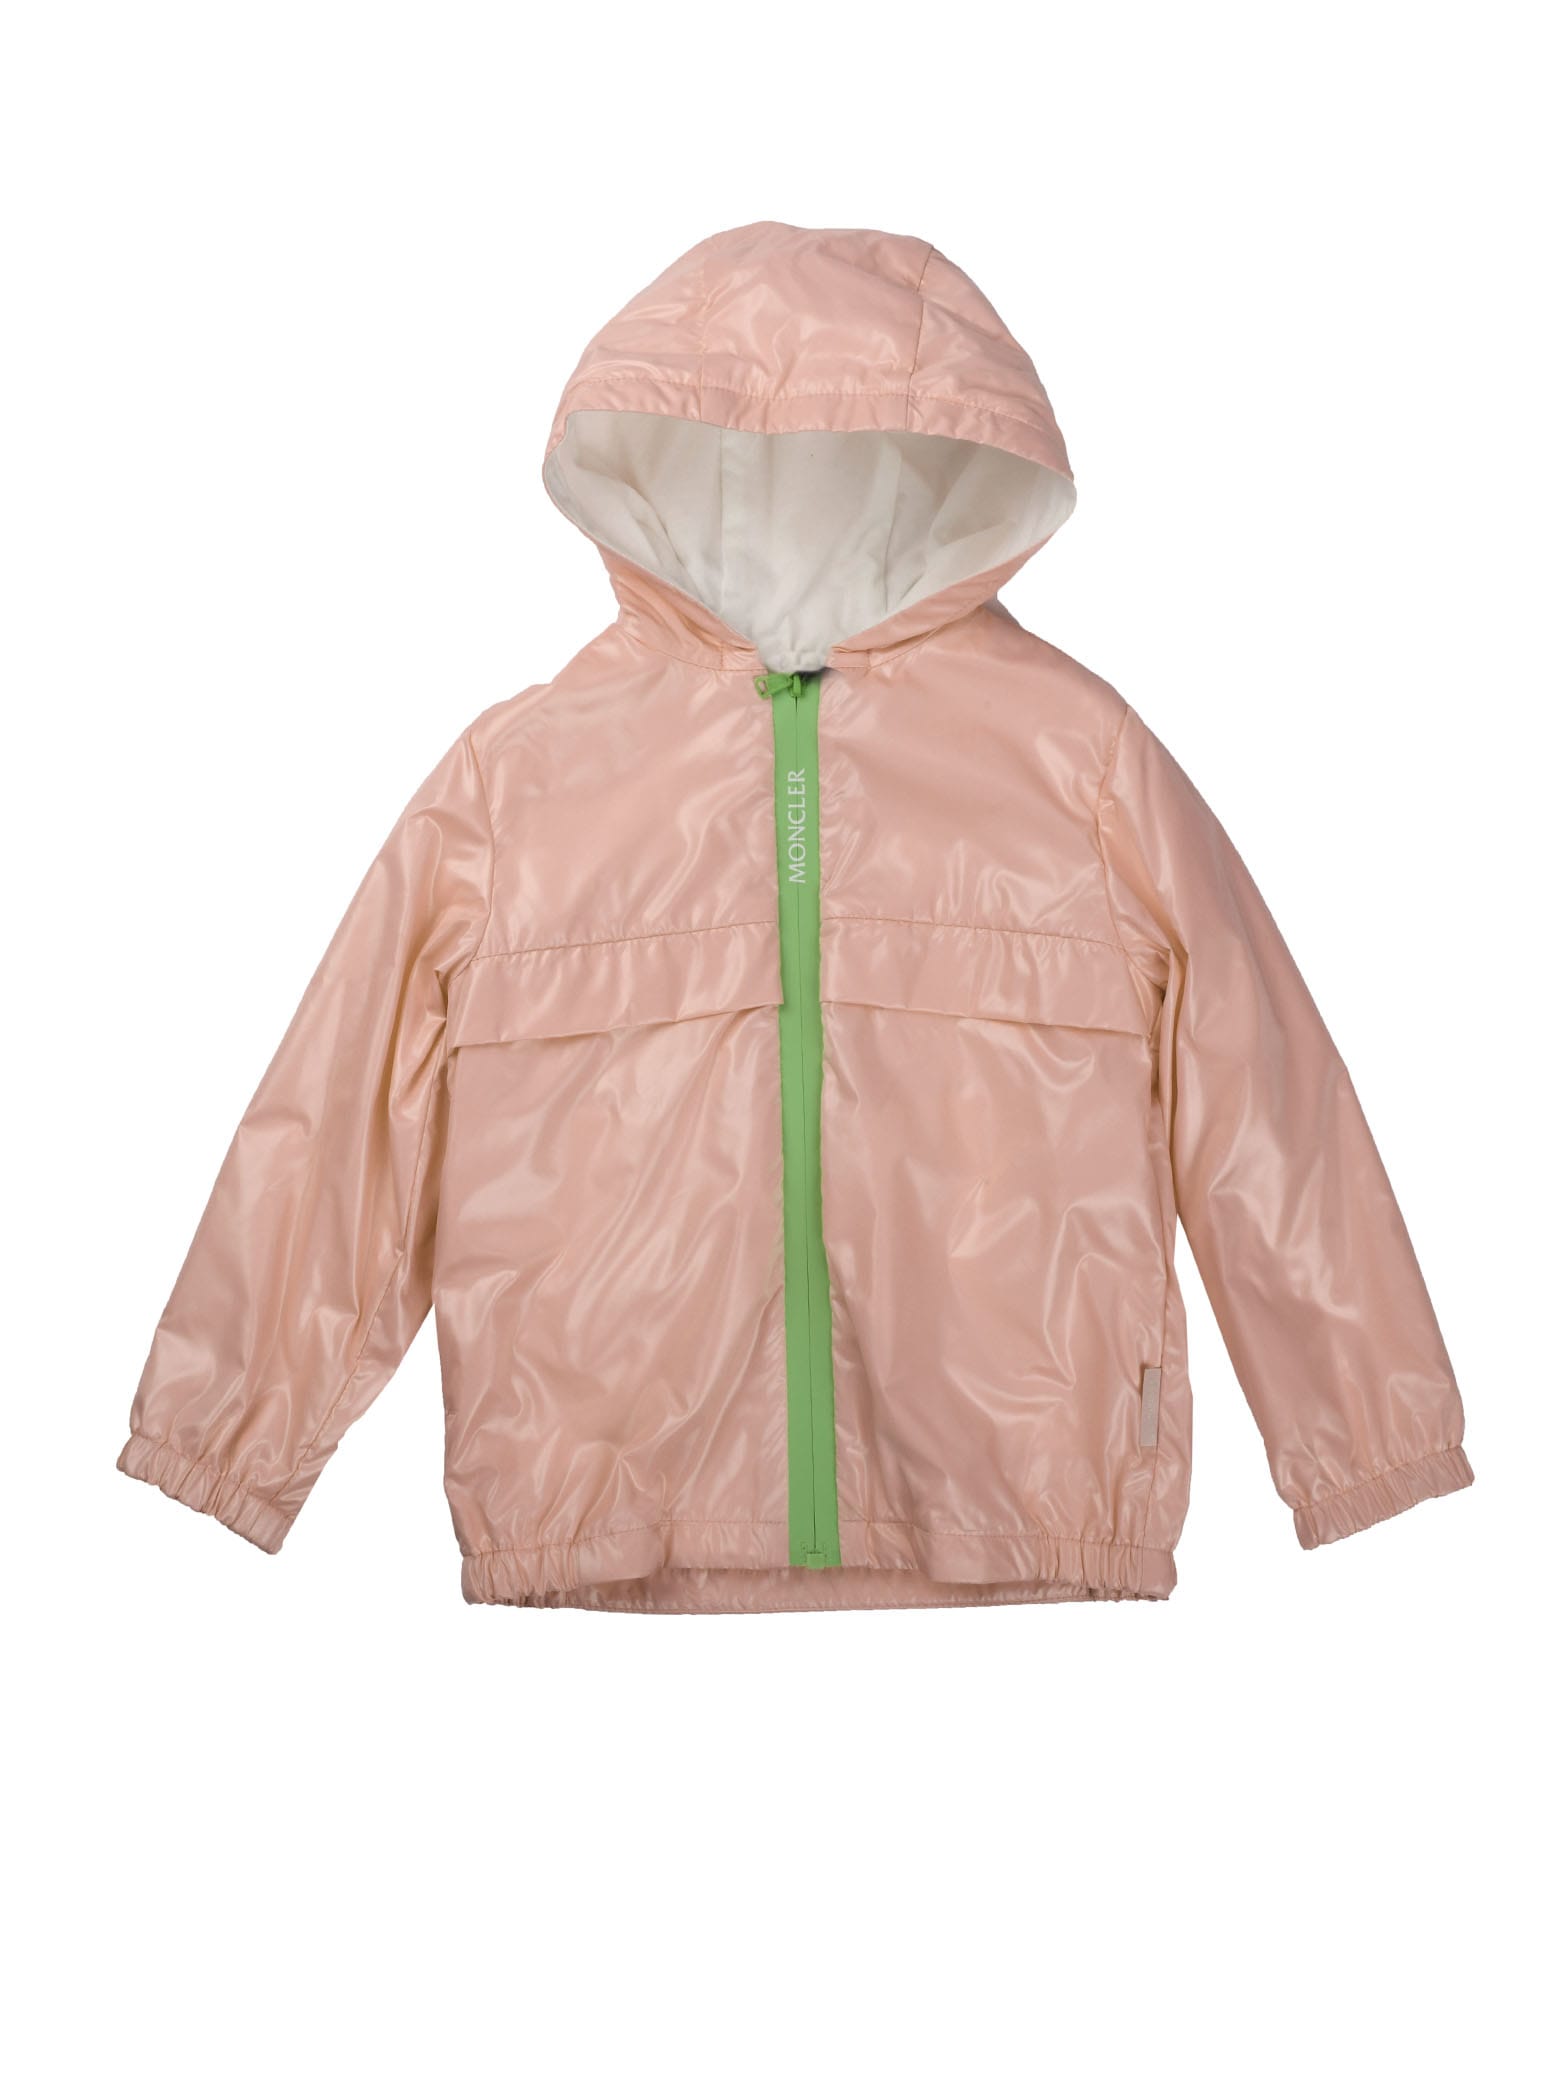 Moncler Babies' Pink Hooded Jacket Plus Green Band